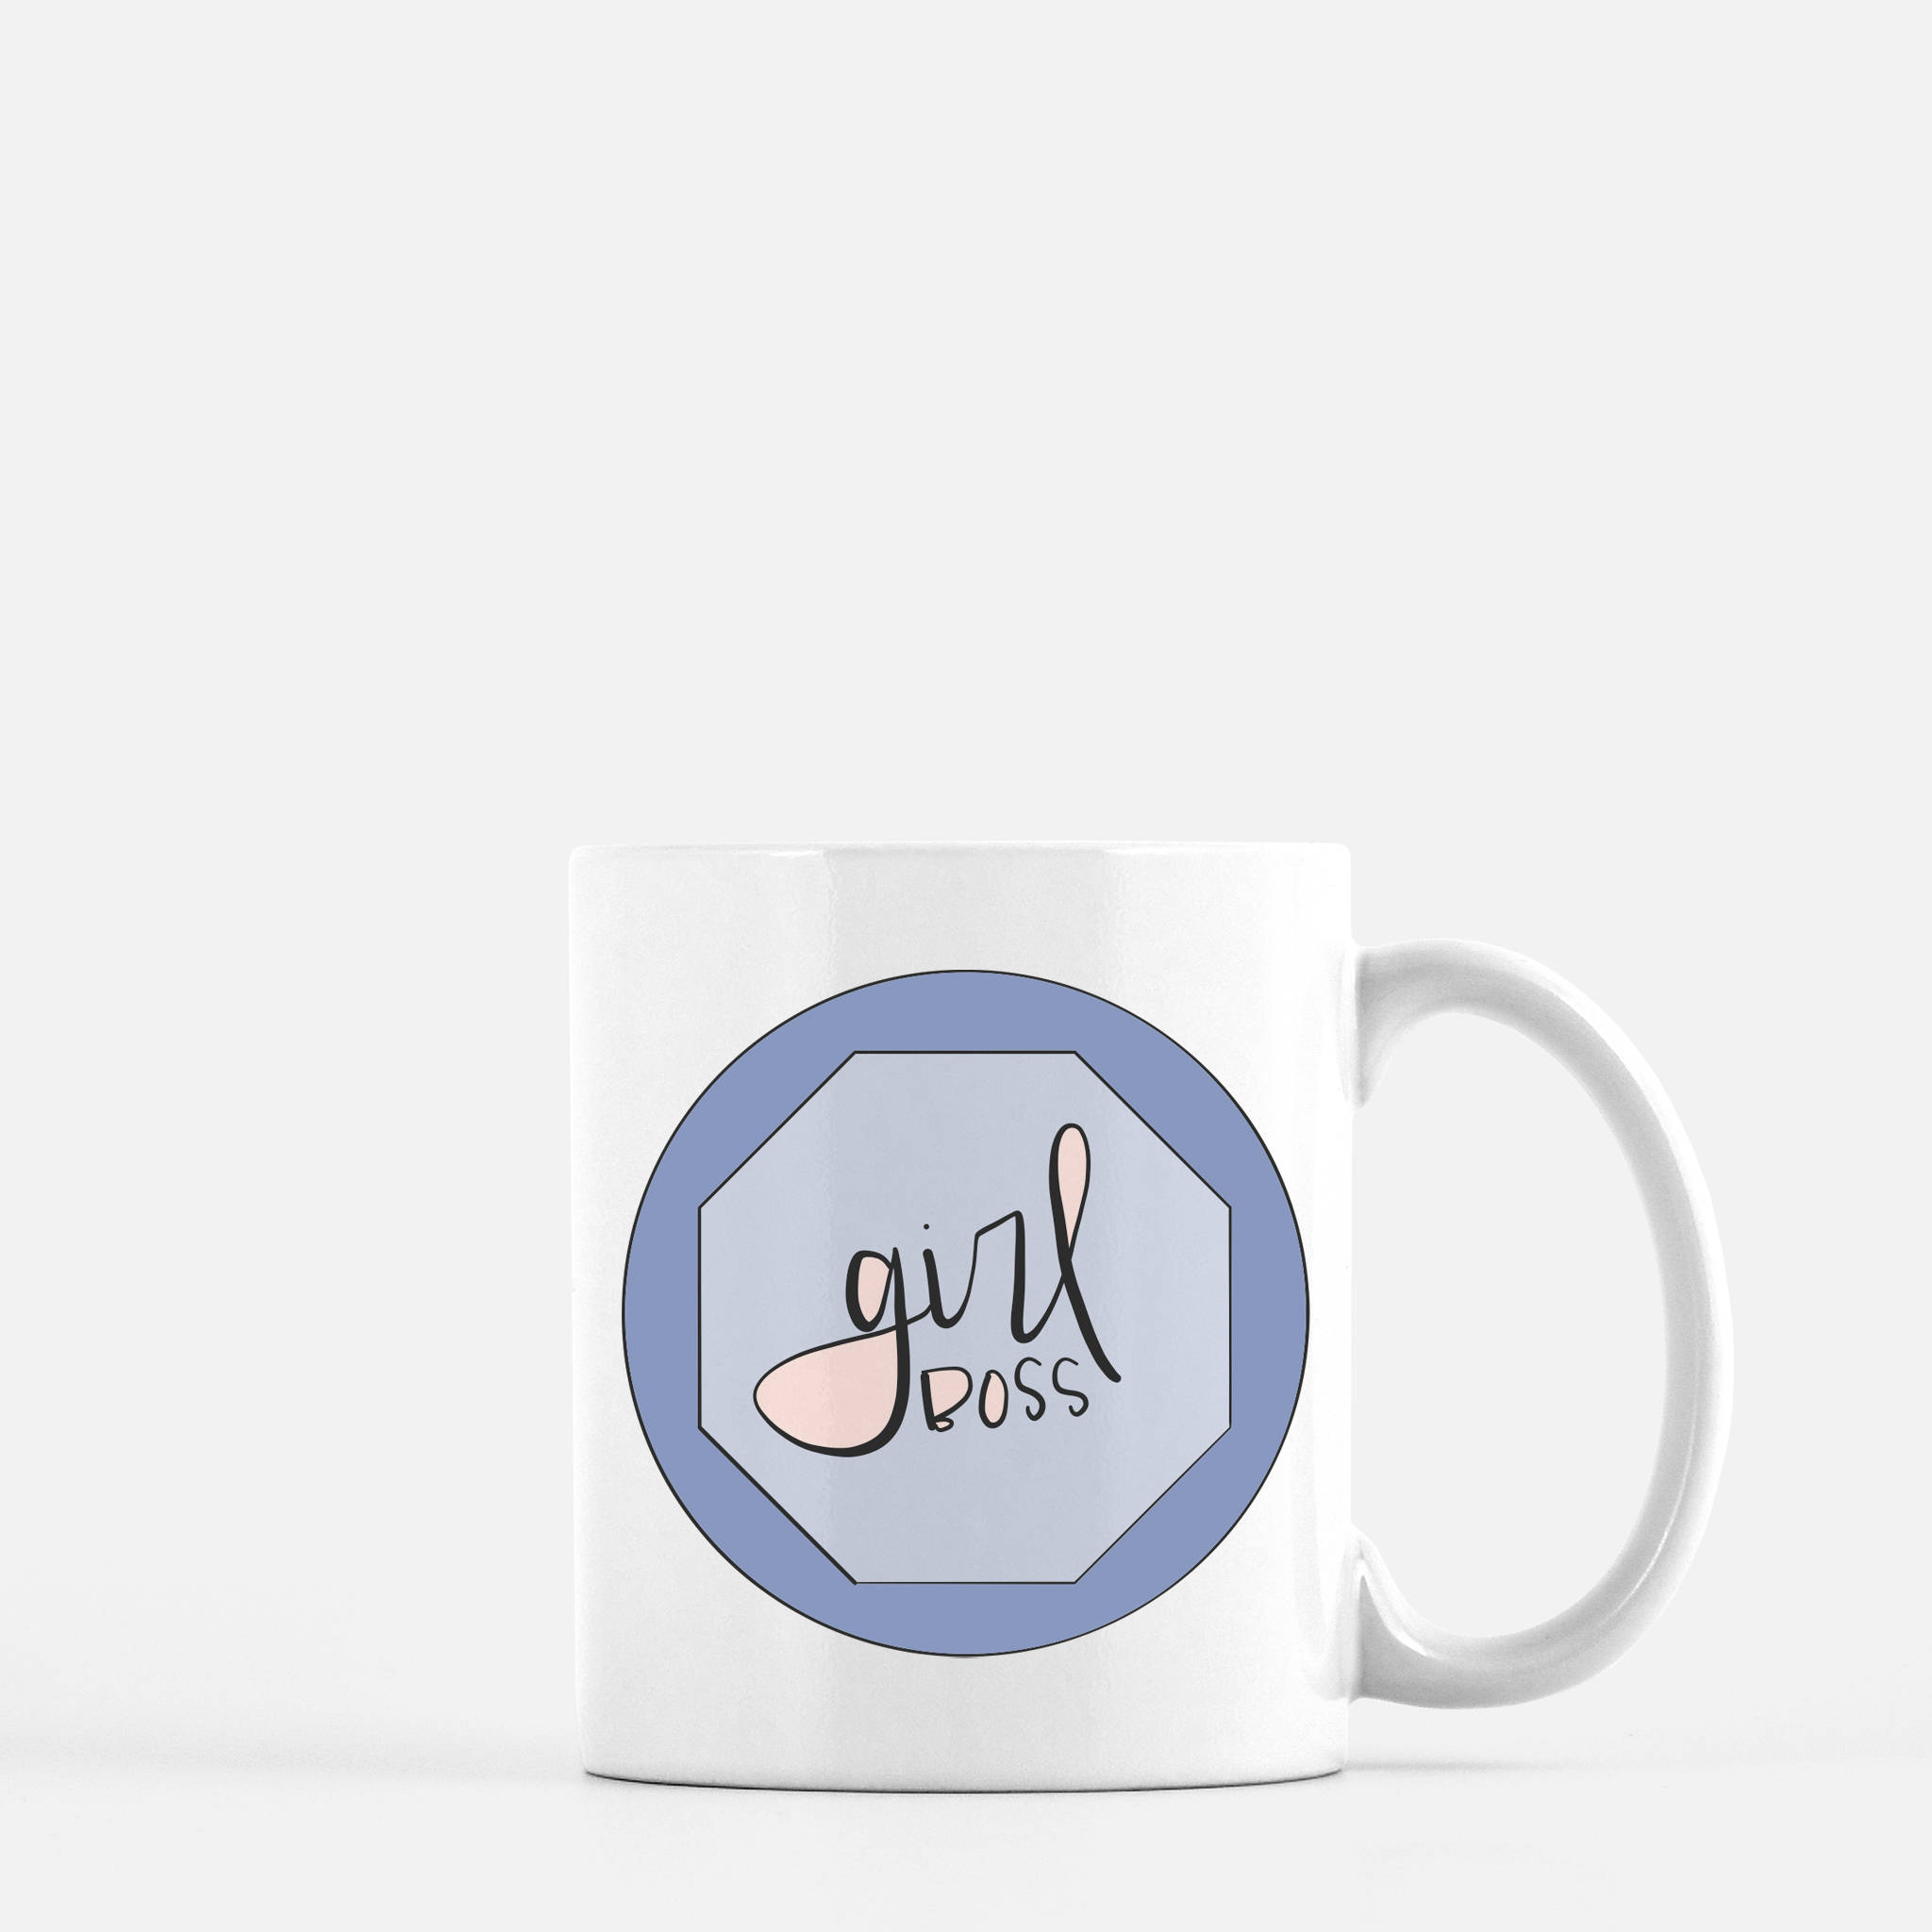 girl boss mug